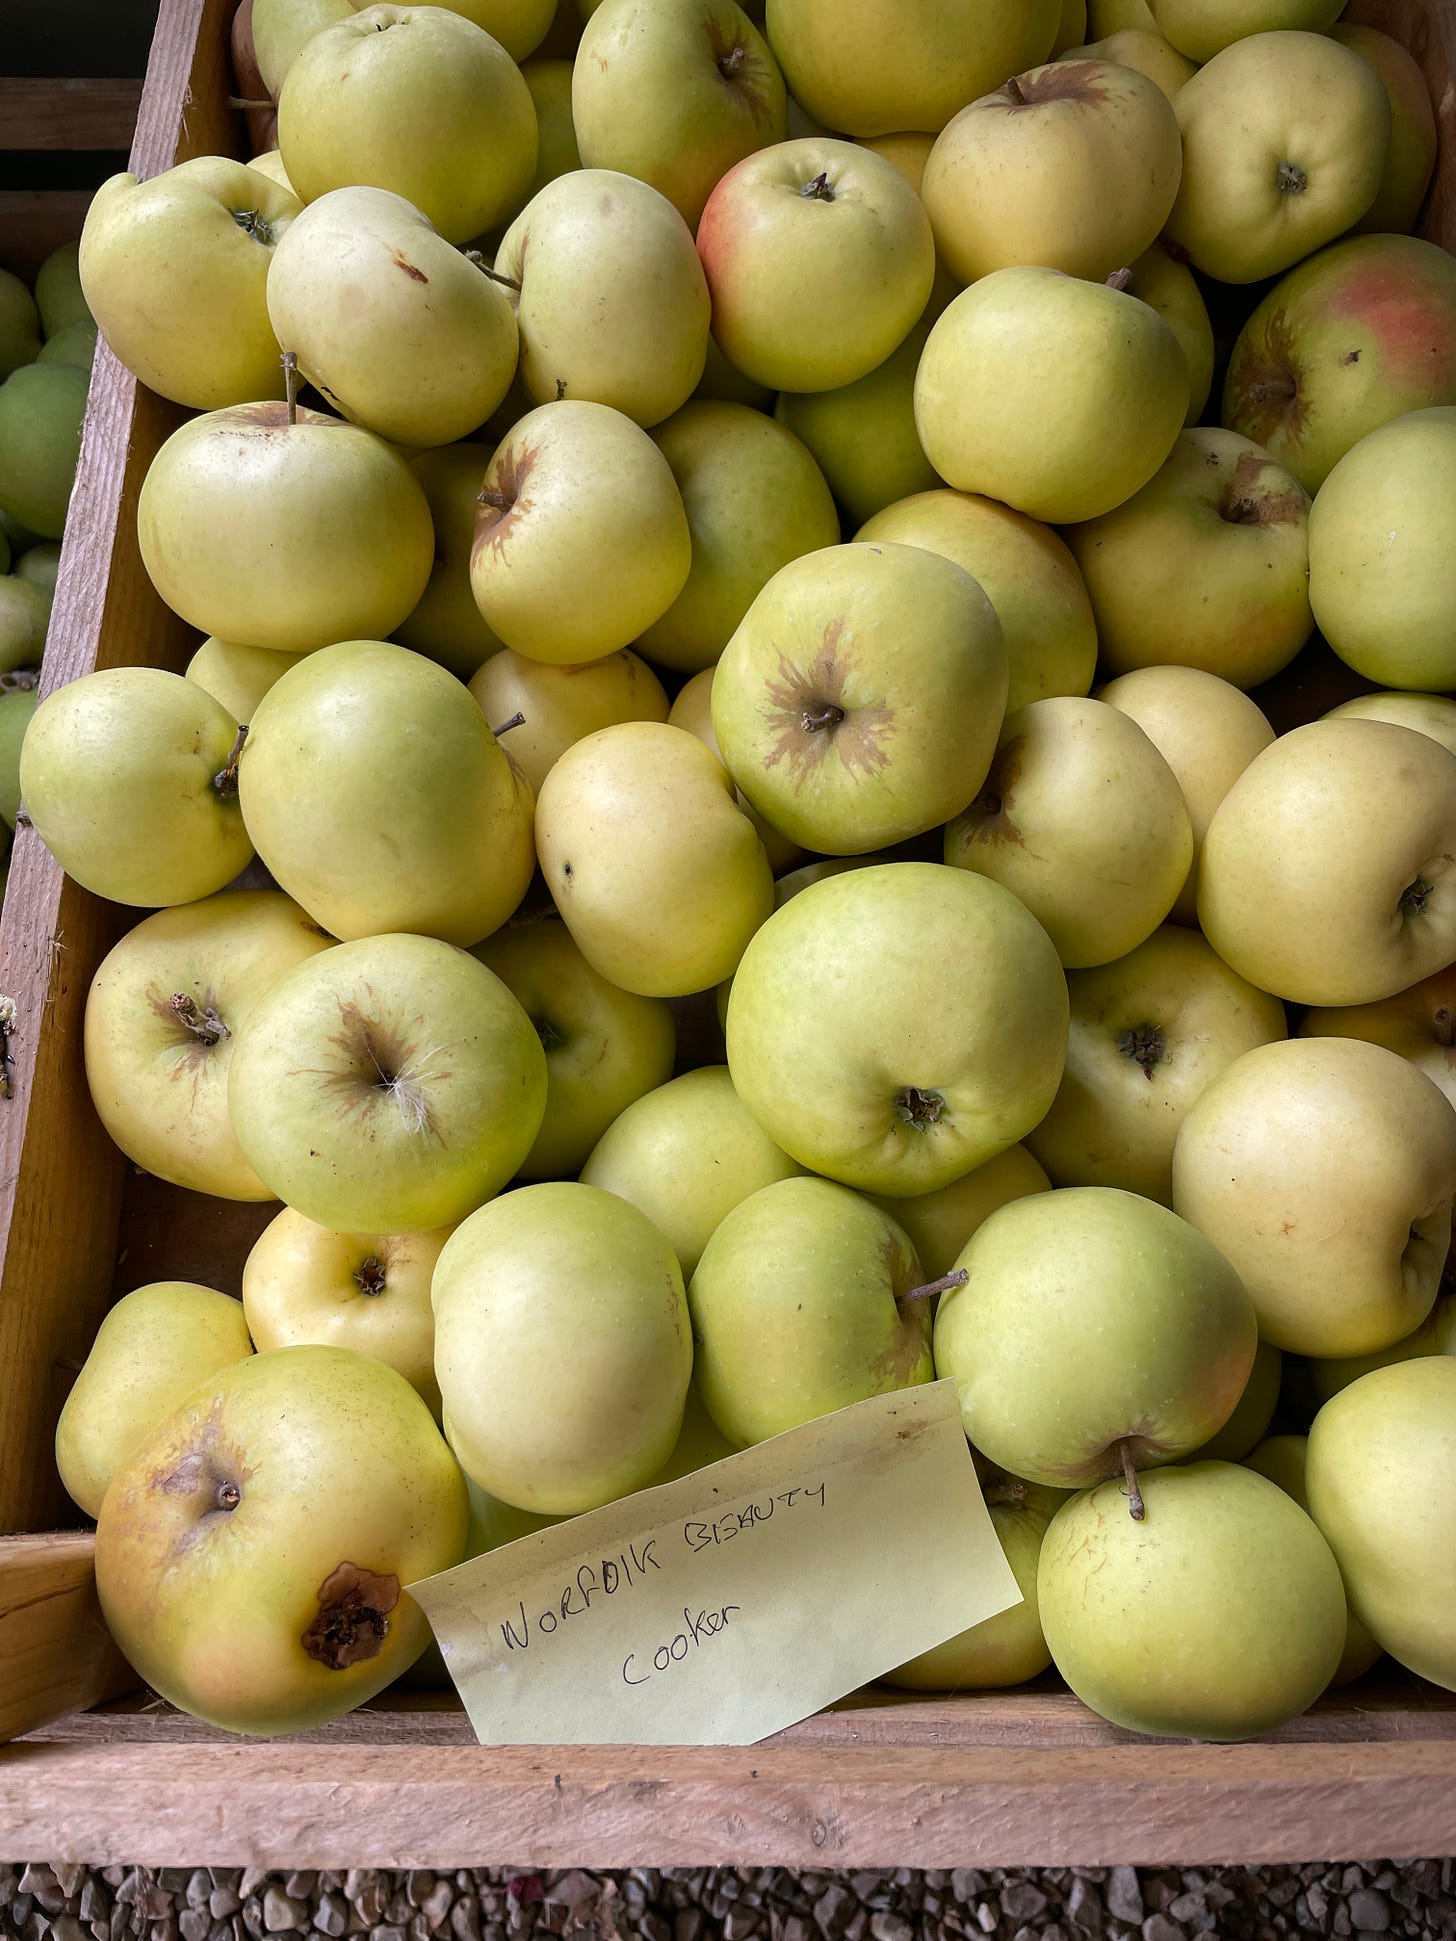 A wooden box full of apples. A handwritten note saying "norfolk beauty cooker"